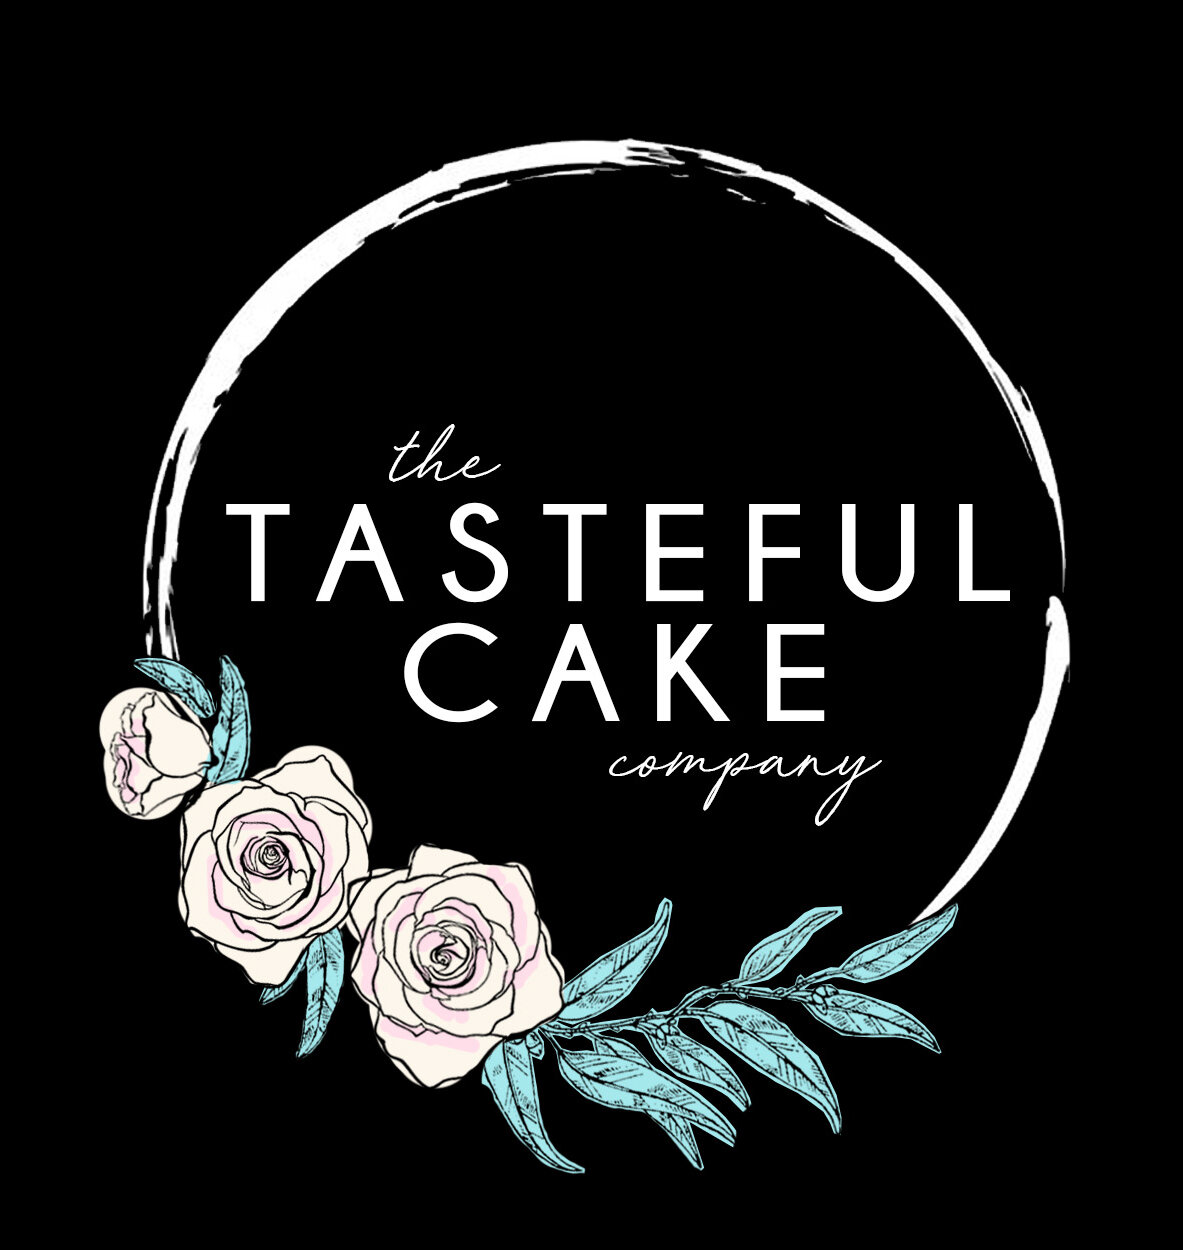 The Tasteful Cake Company